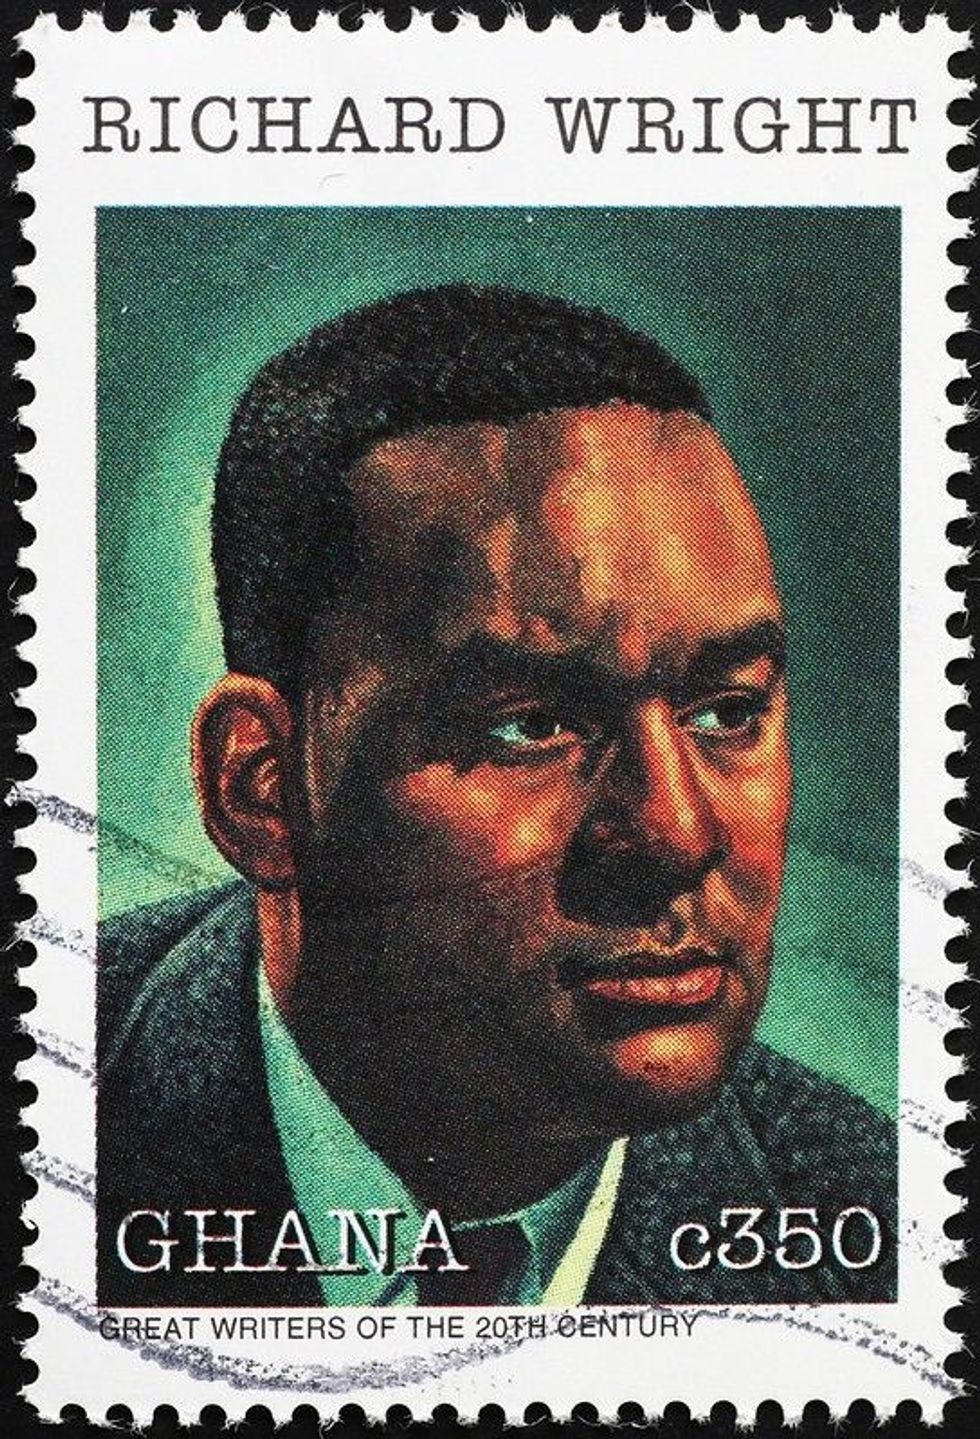 Richard Wright portrait on postage stamp.